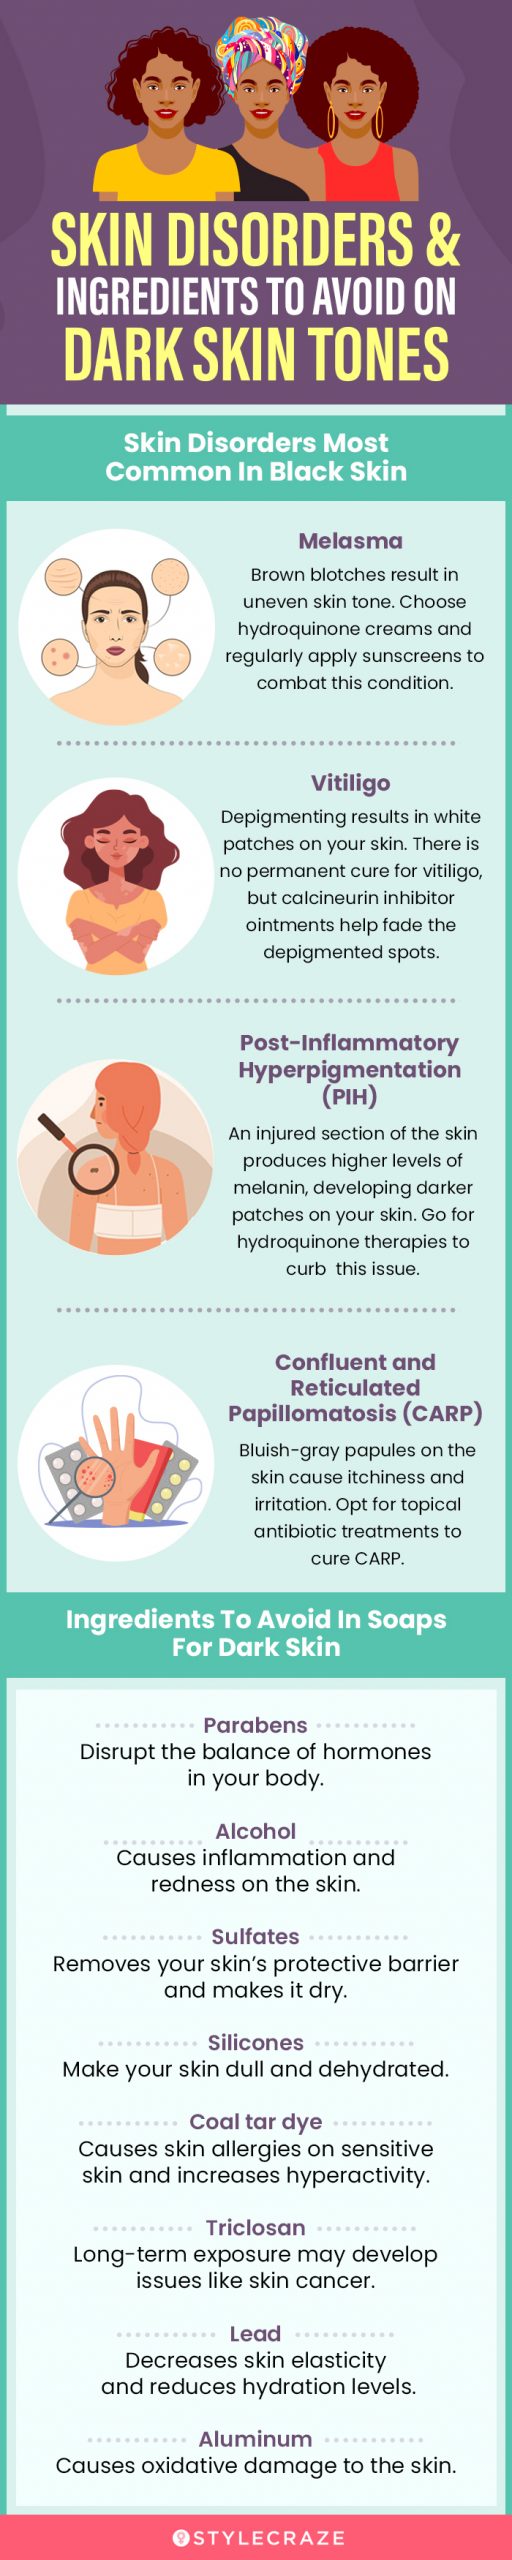 Ingredients To Avoid On Dark Skin Tones [infographic]